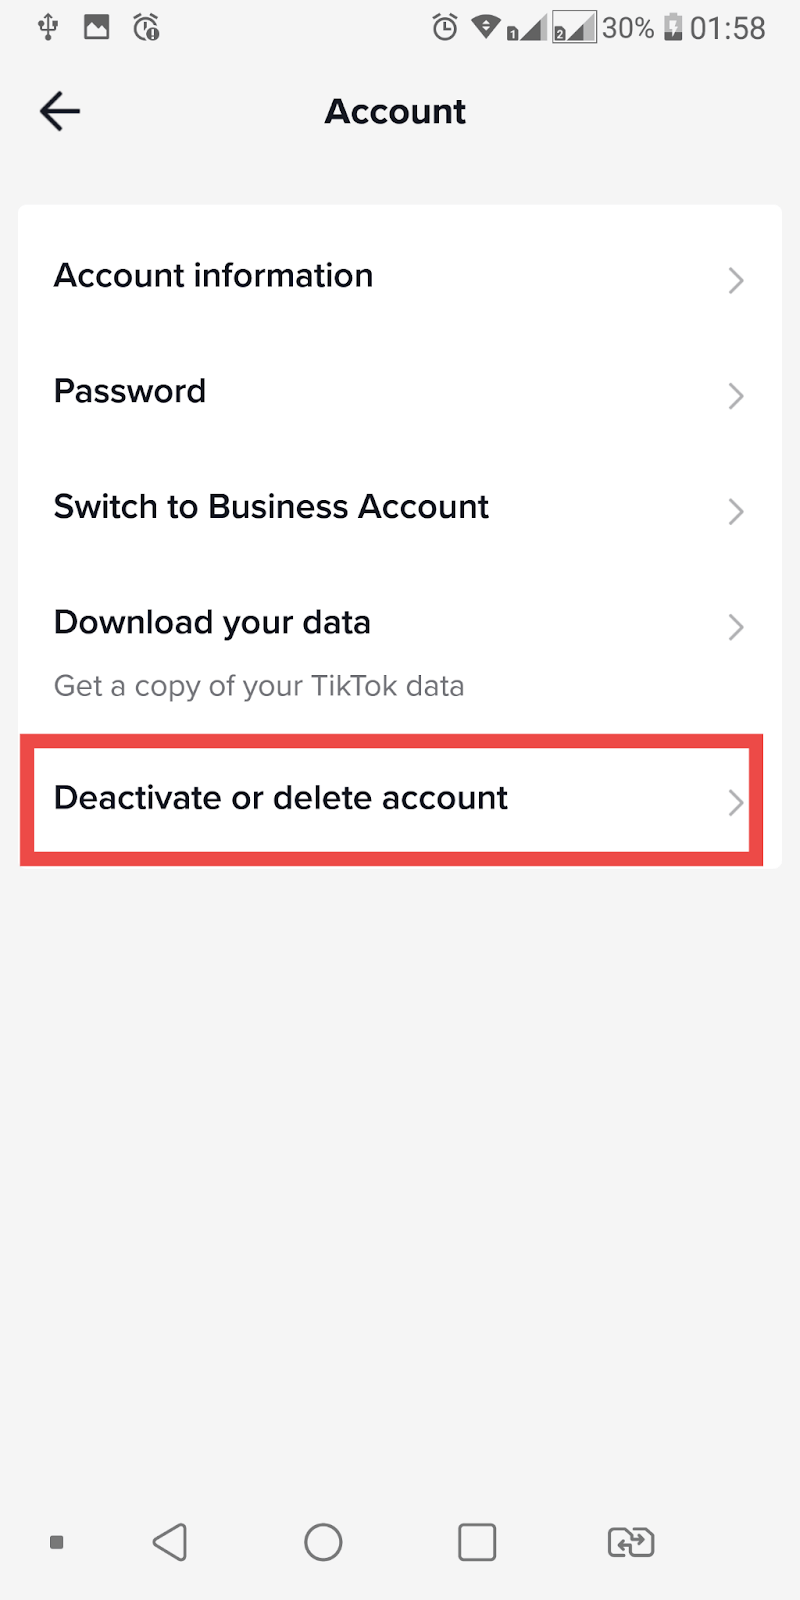 Select Deactivate or delete account